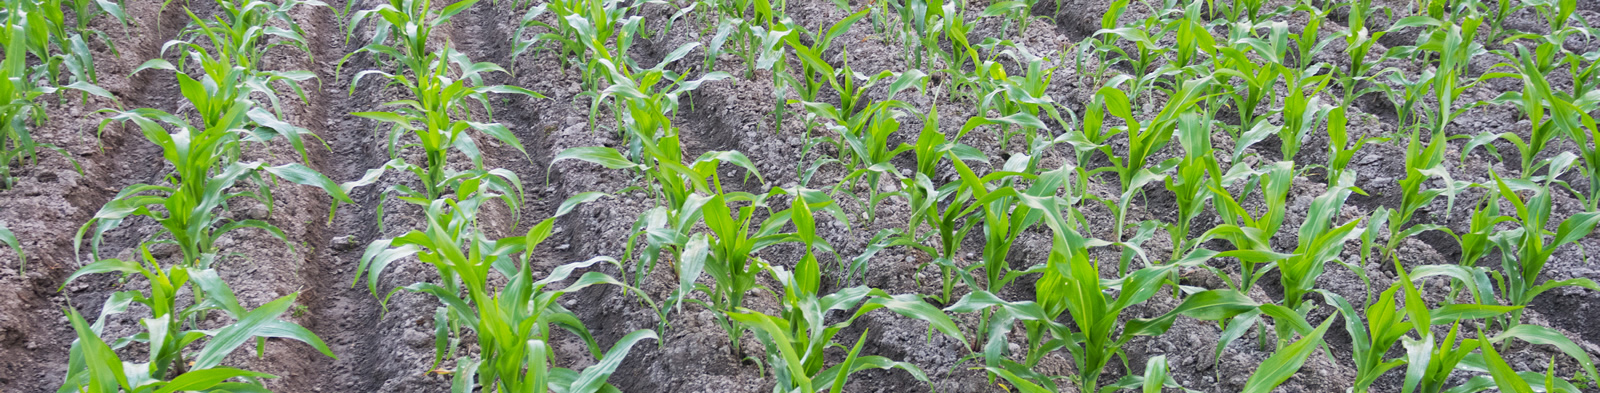 Maize Crop in Bangladesh